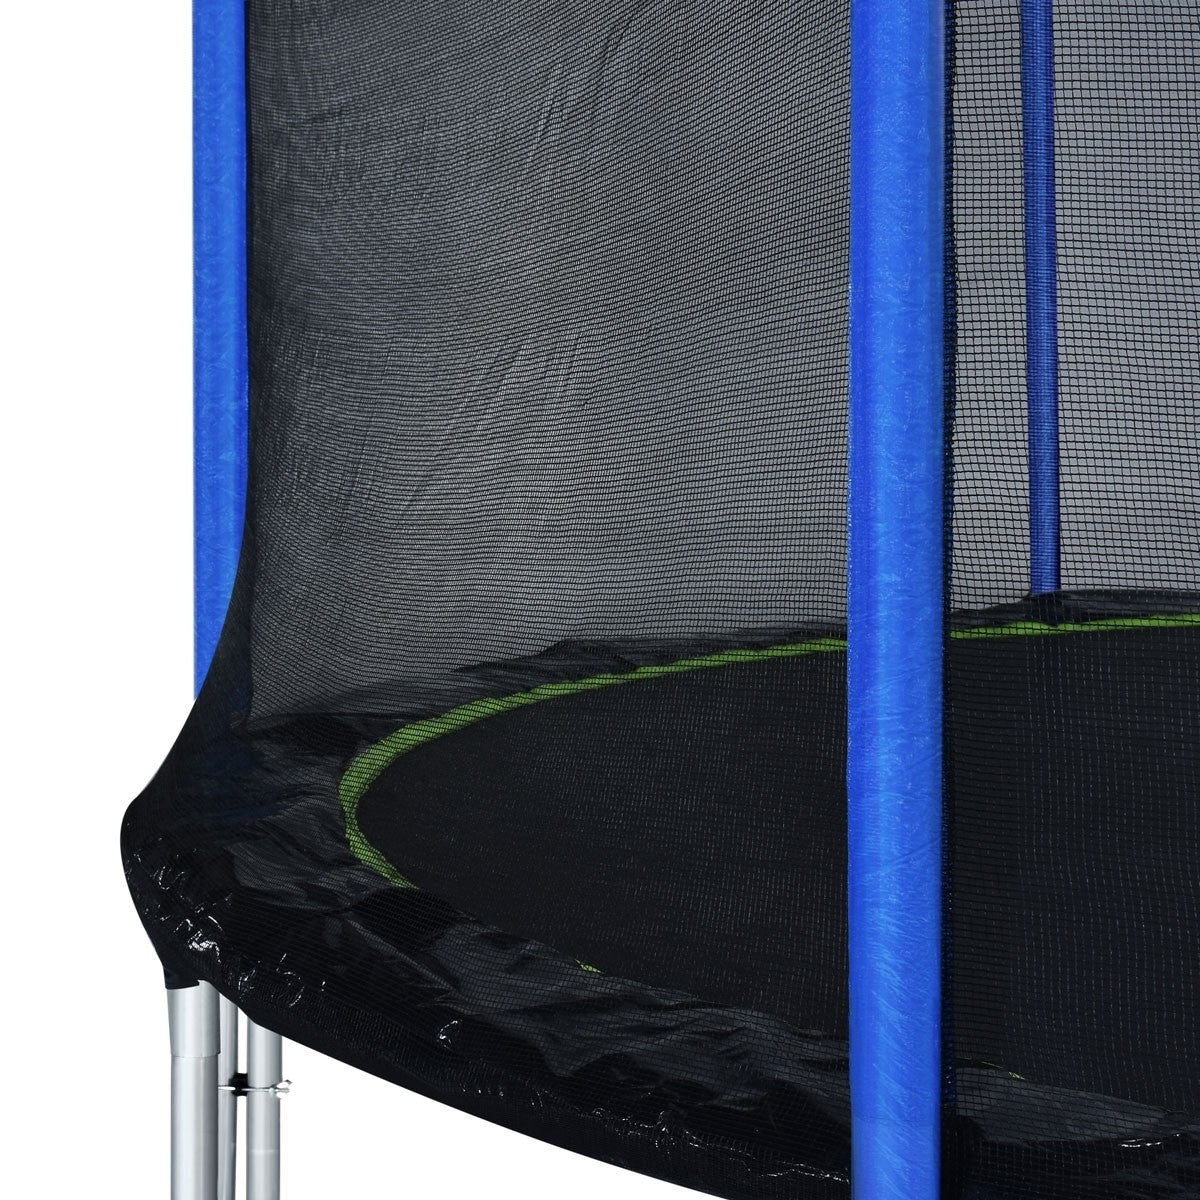 10ft Saffun trampoline enclosure net